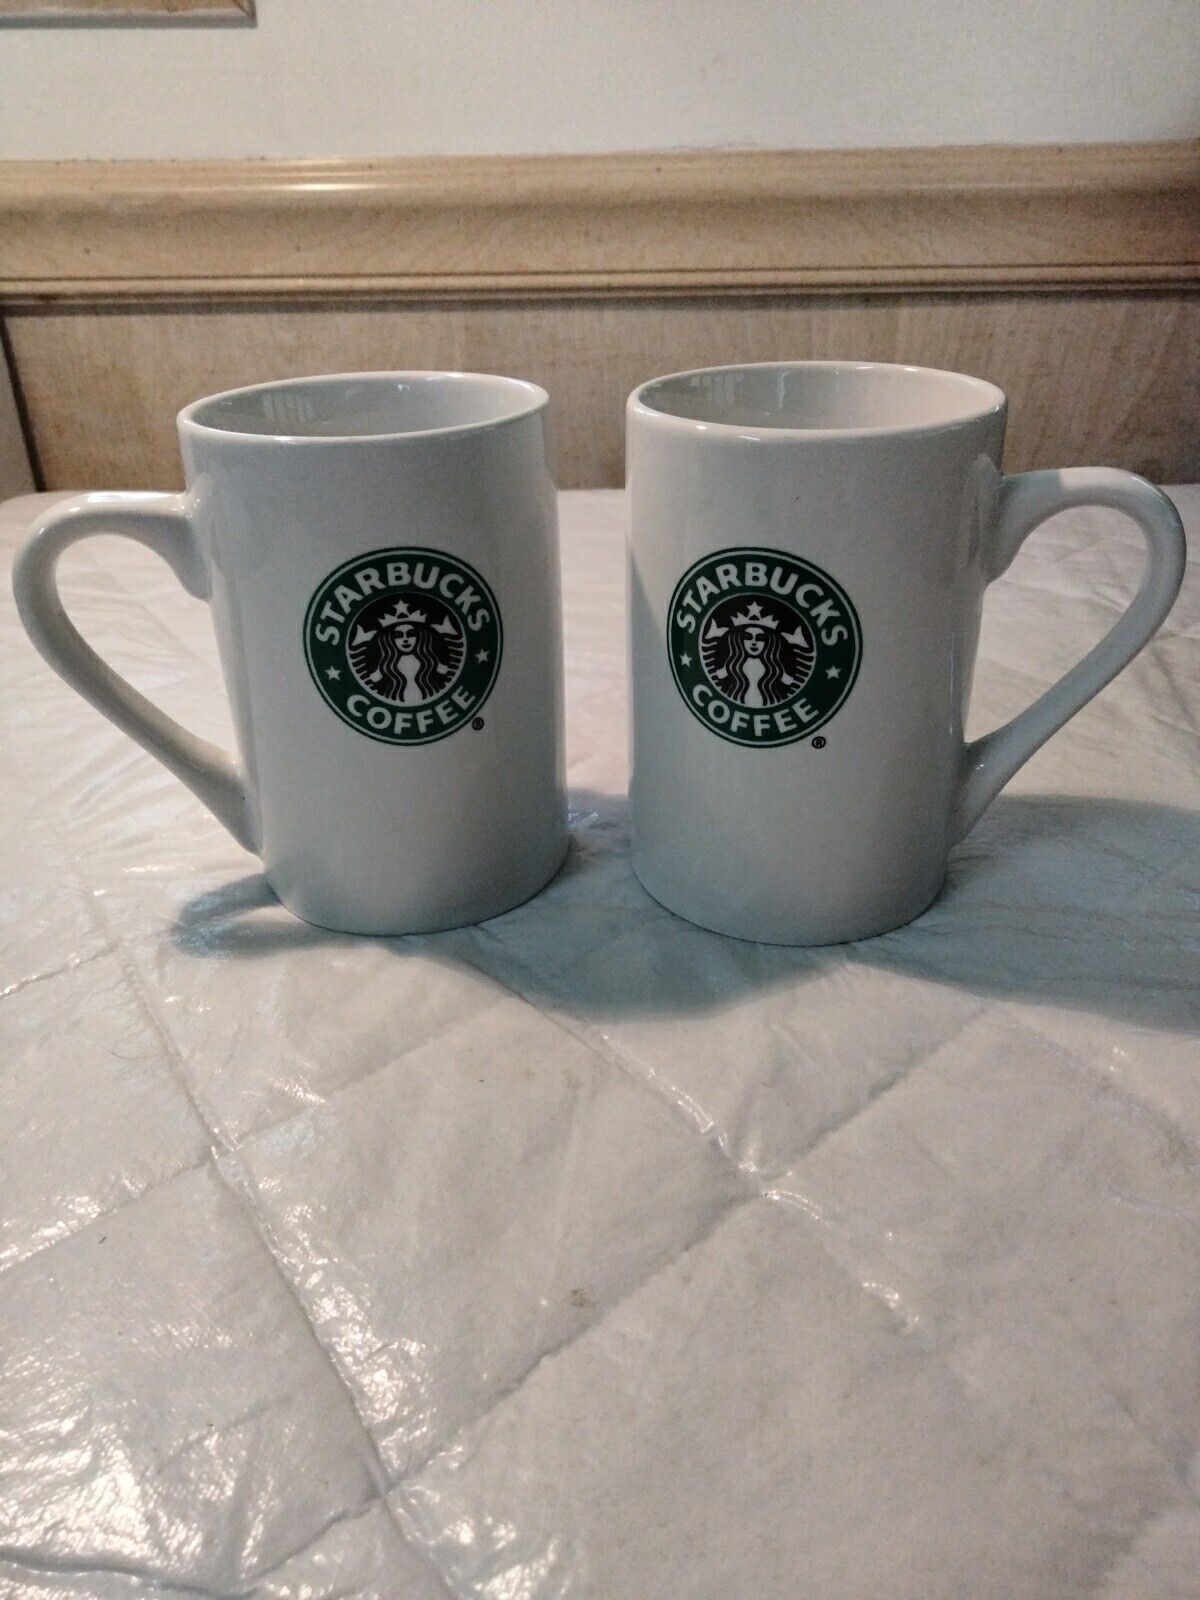 2008 Starbucks Coffee Mug White - Classic Siren Mermaid Logo 10 oz  (Lot of 2)